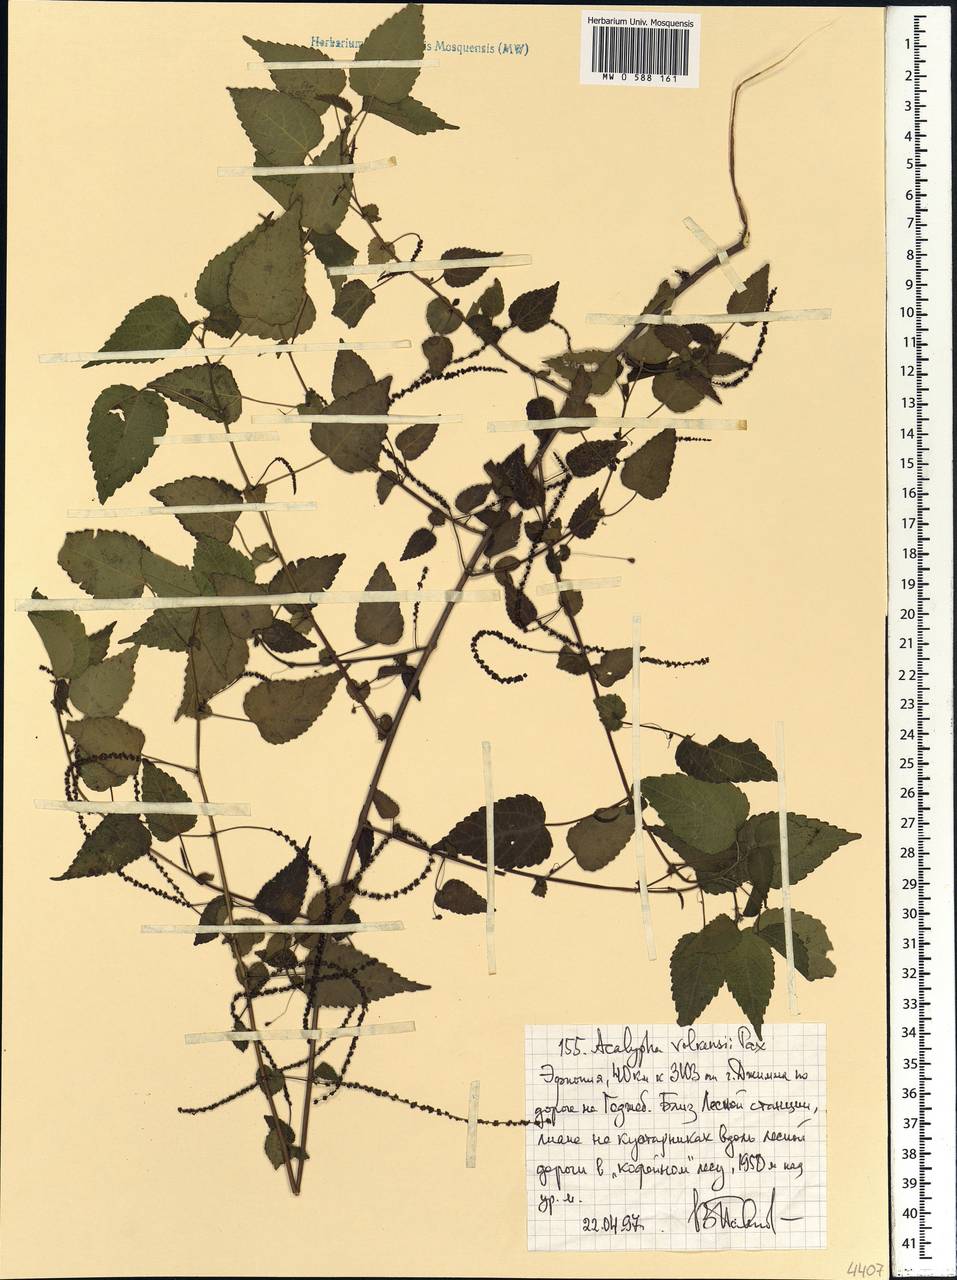 Acalypha volkensii Pax, Африка (AFR) (Эфиопия)